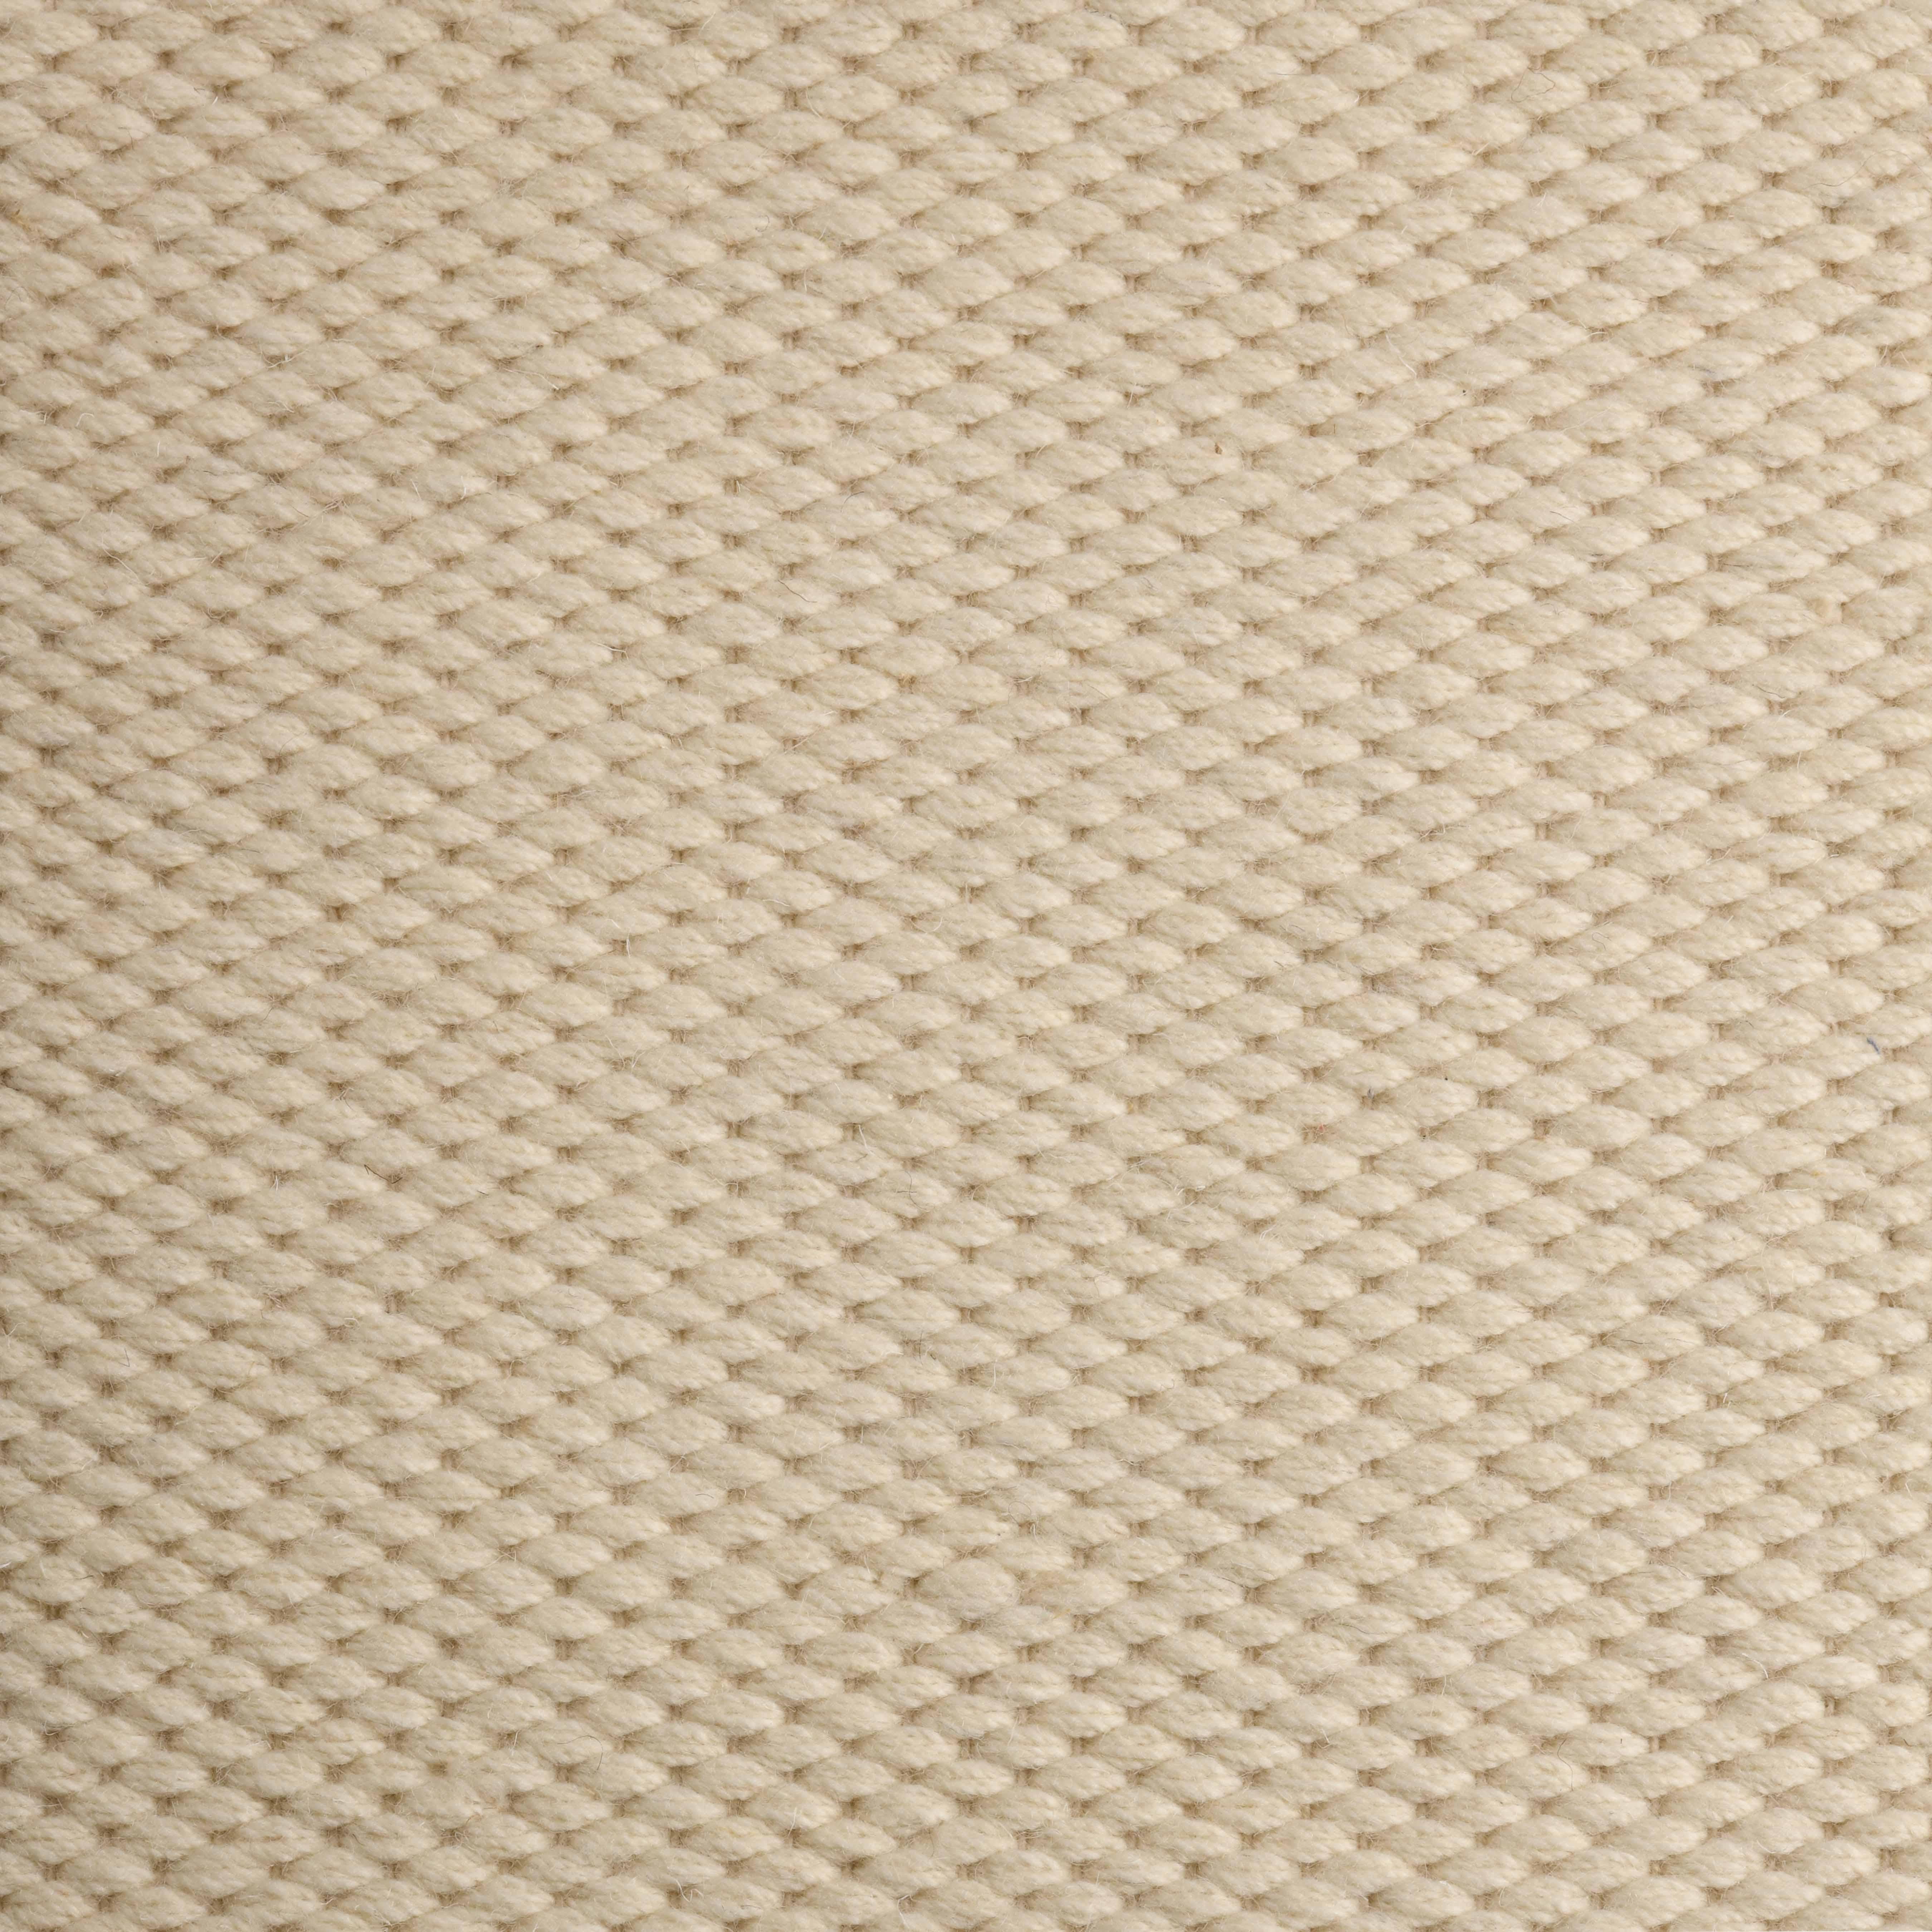 Quies, Ivory, Handwoven, New Zealand and Mediterranean wools, 8' x 10'